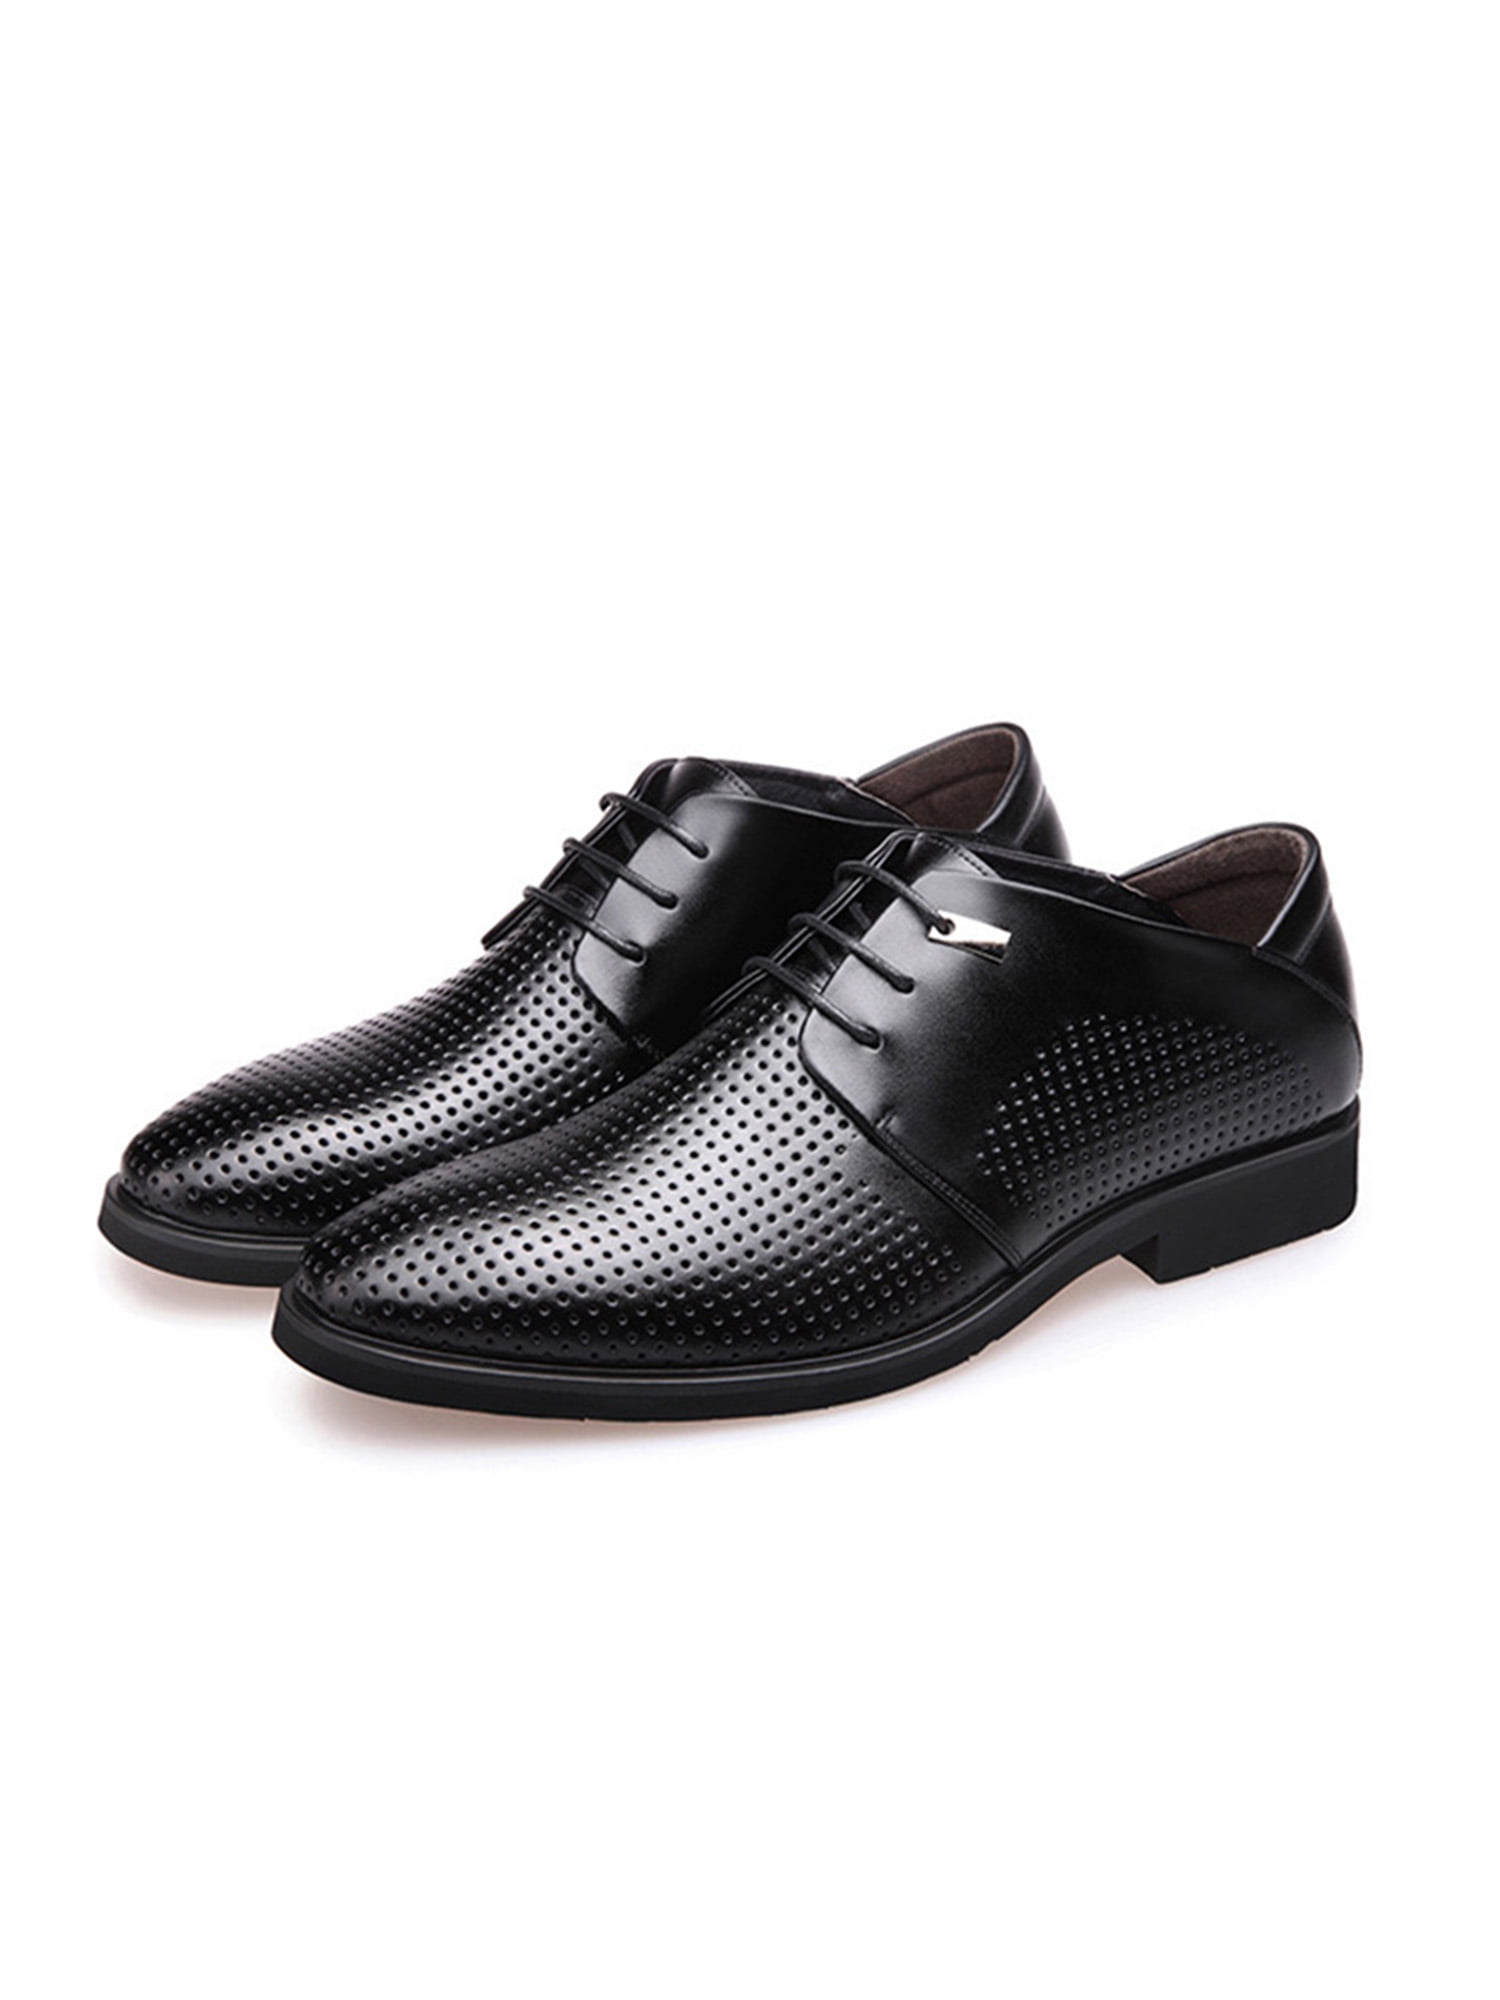 hot Mens shiny Business Brogue tassels slip on formal Black casual Dress shoes